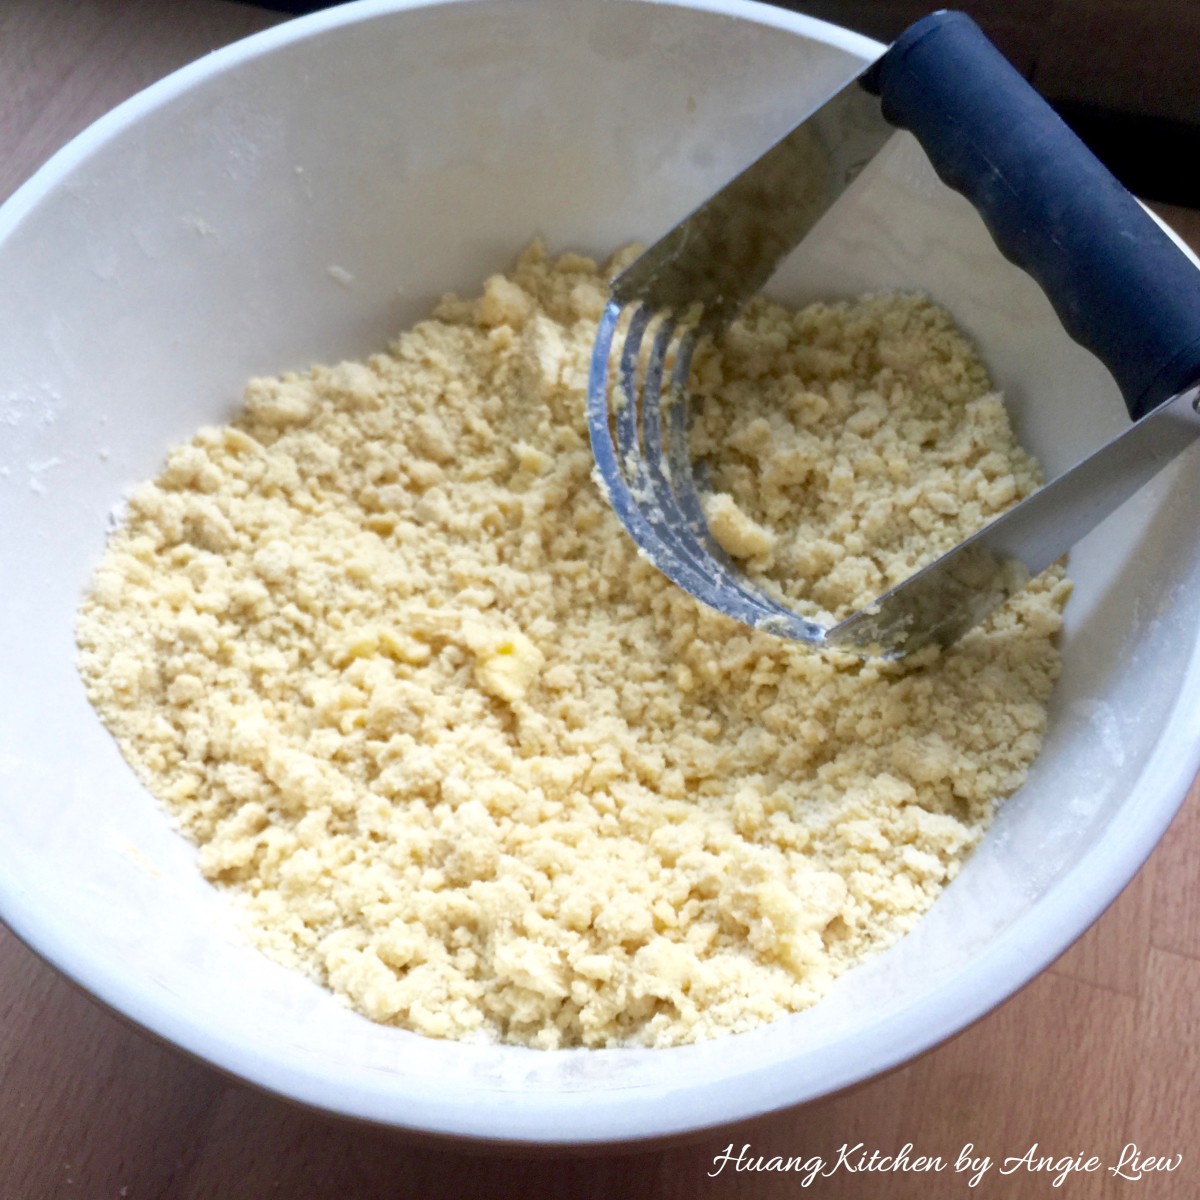 Rose Pineapple Tarts Recipe - cut into flour